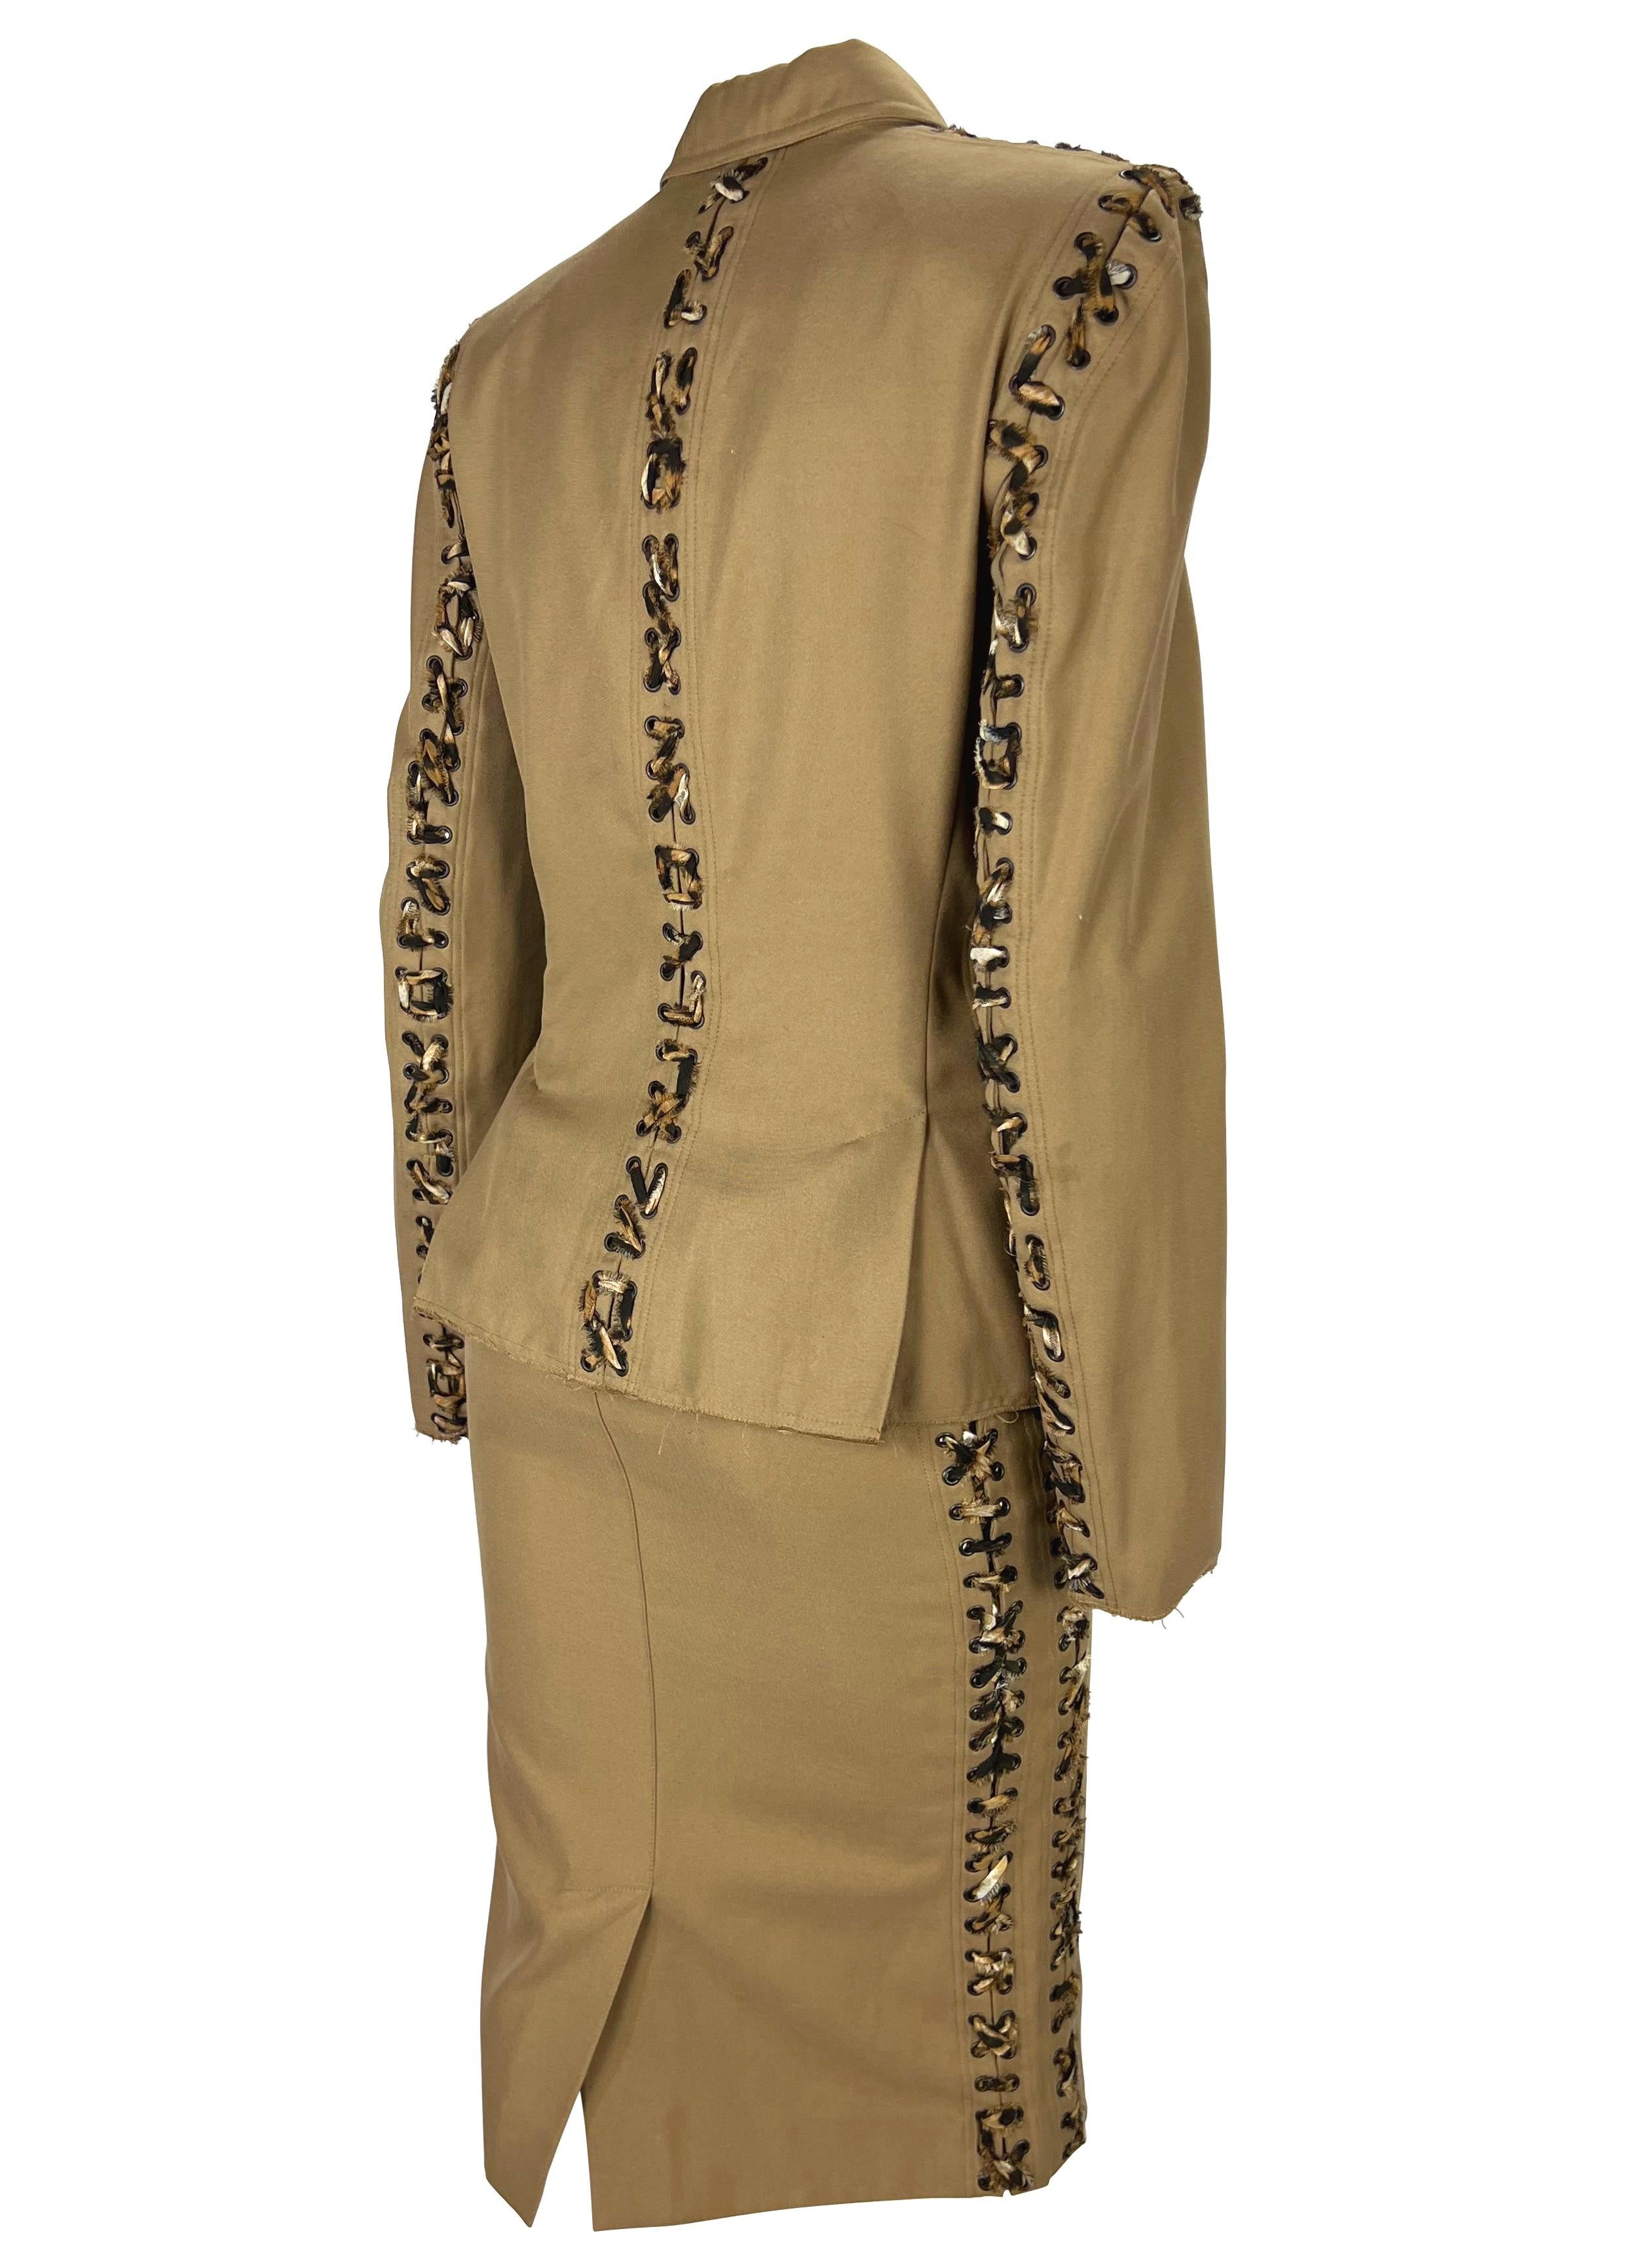 Women's S/S 2002 Yves Saint Laurent by Tom Ford Safari Cheetah Print Lace-Up Khaki Suit For Sale